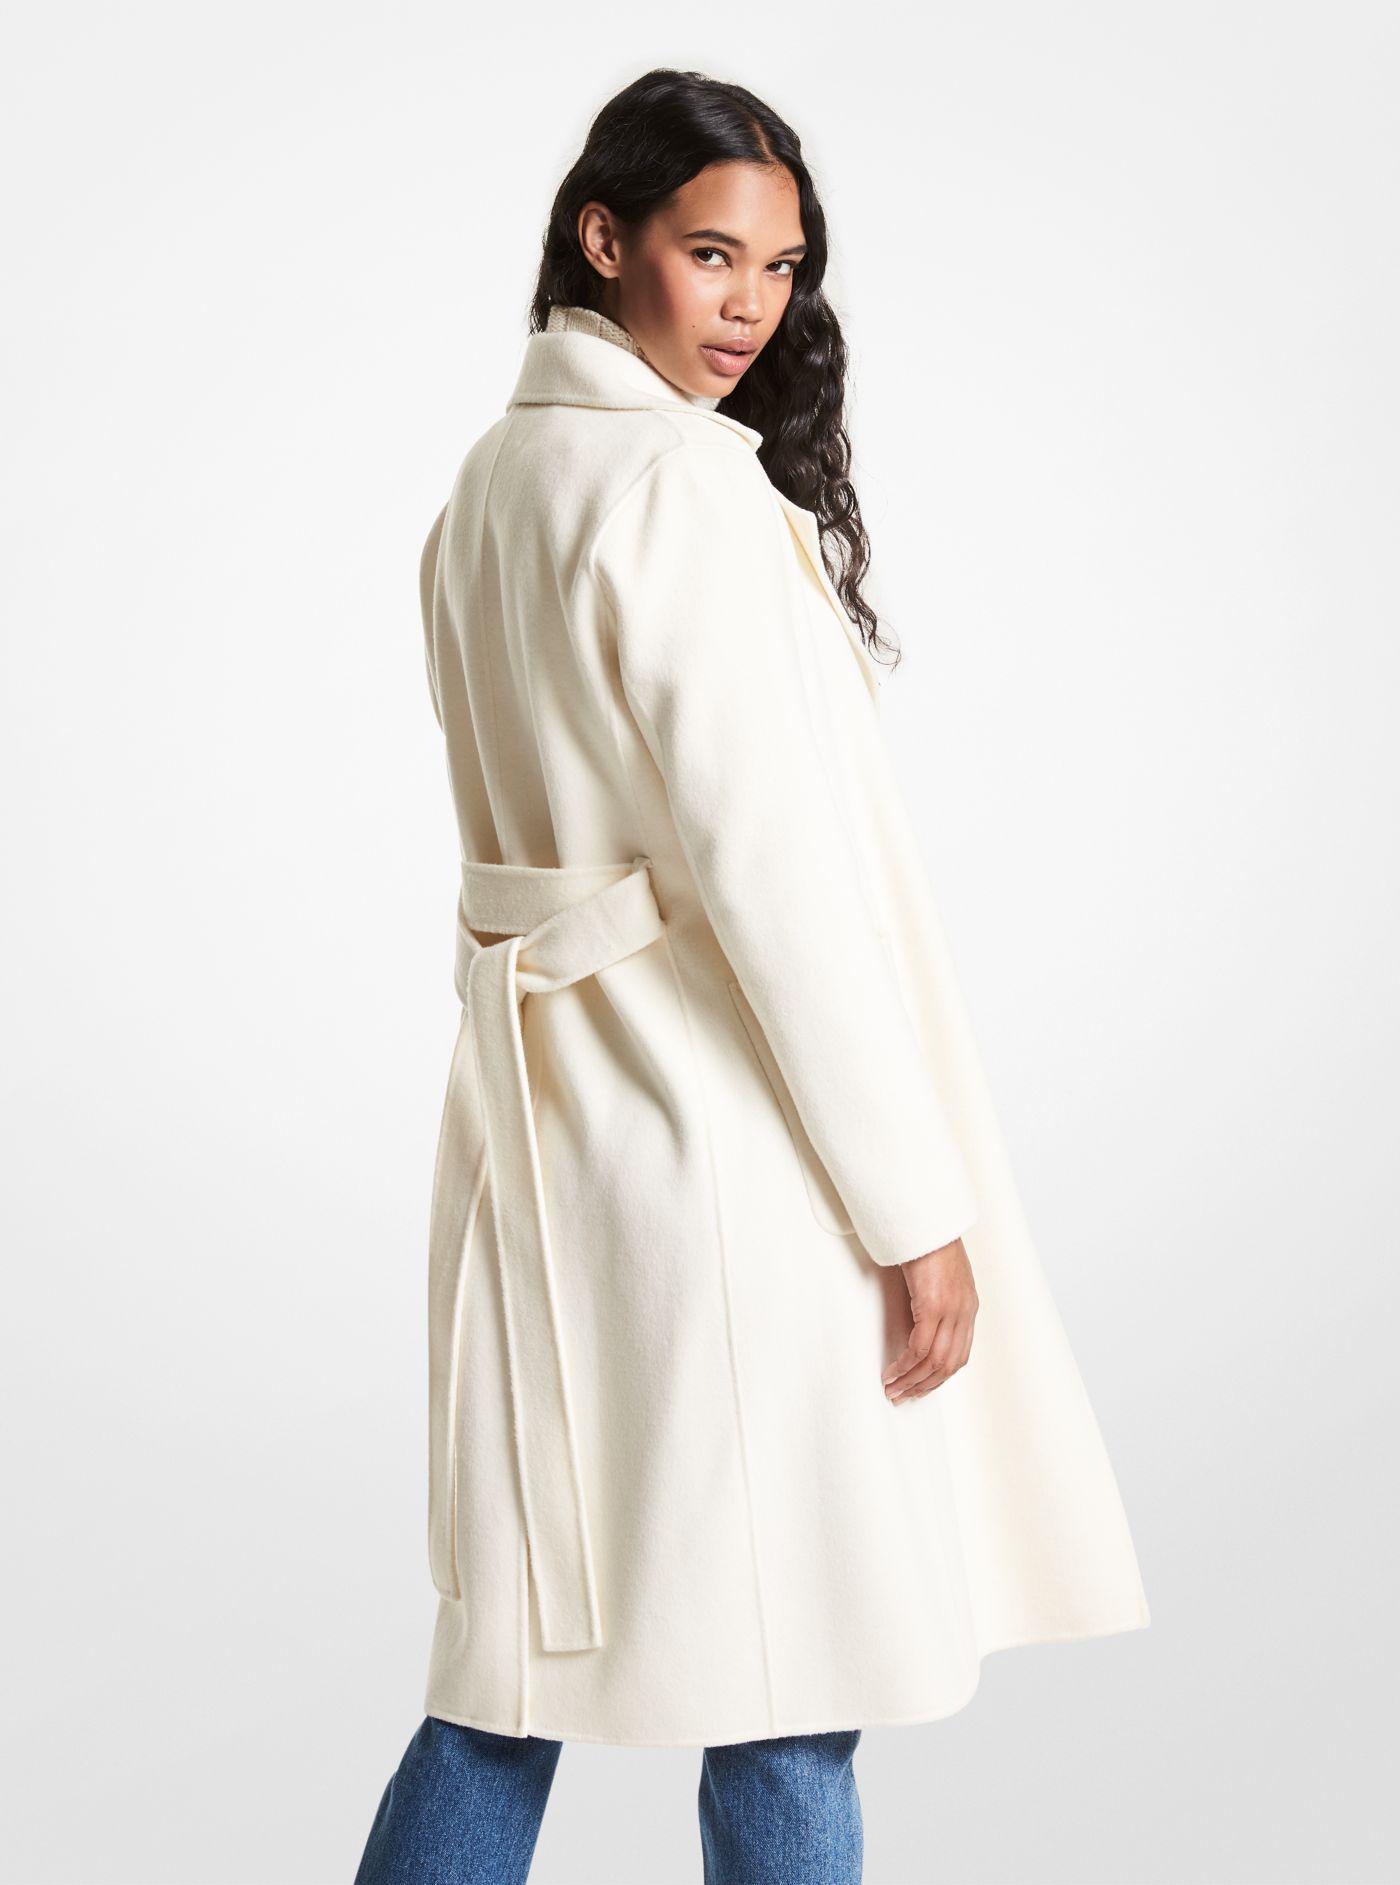 Michael Kors Wool Blend Wrap Coat in Natural | Lyst